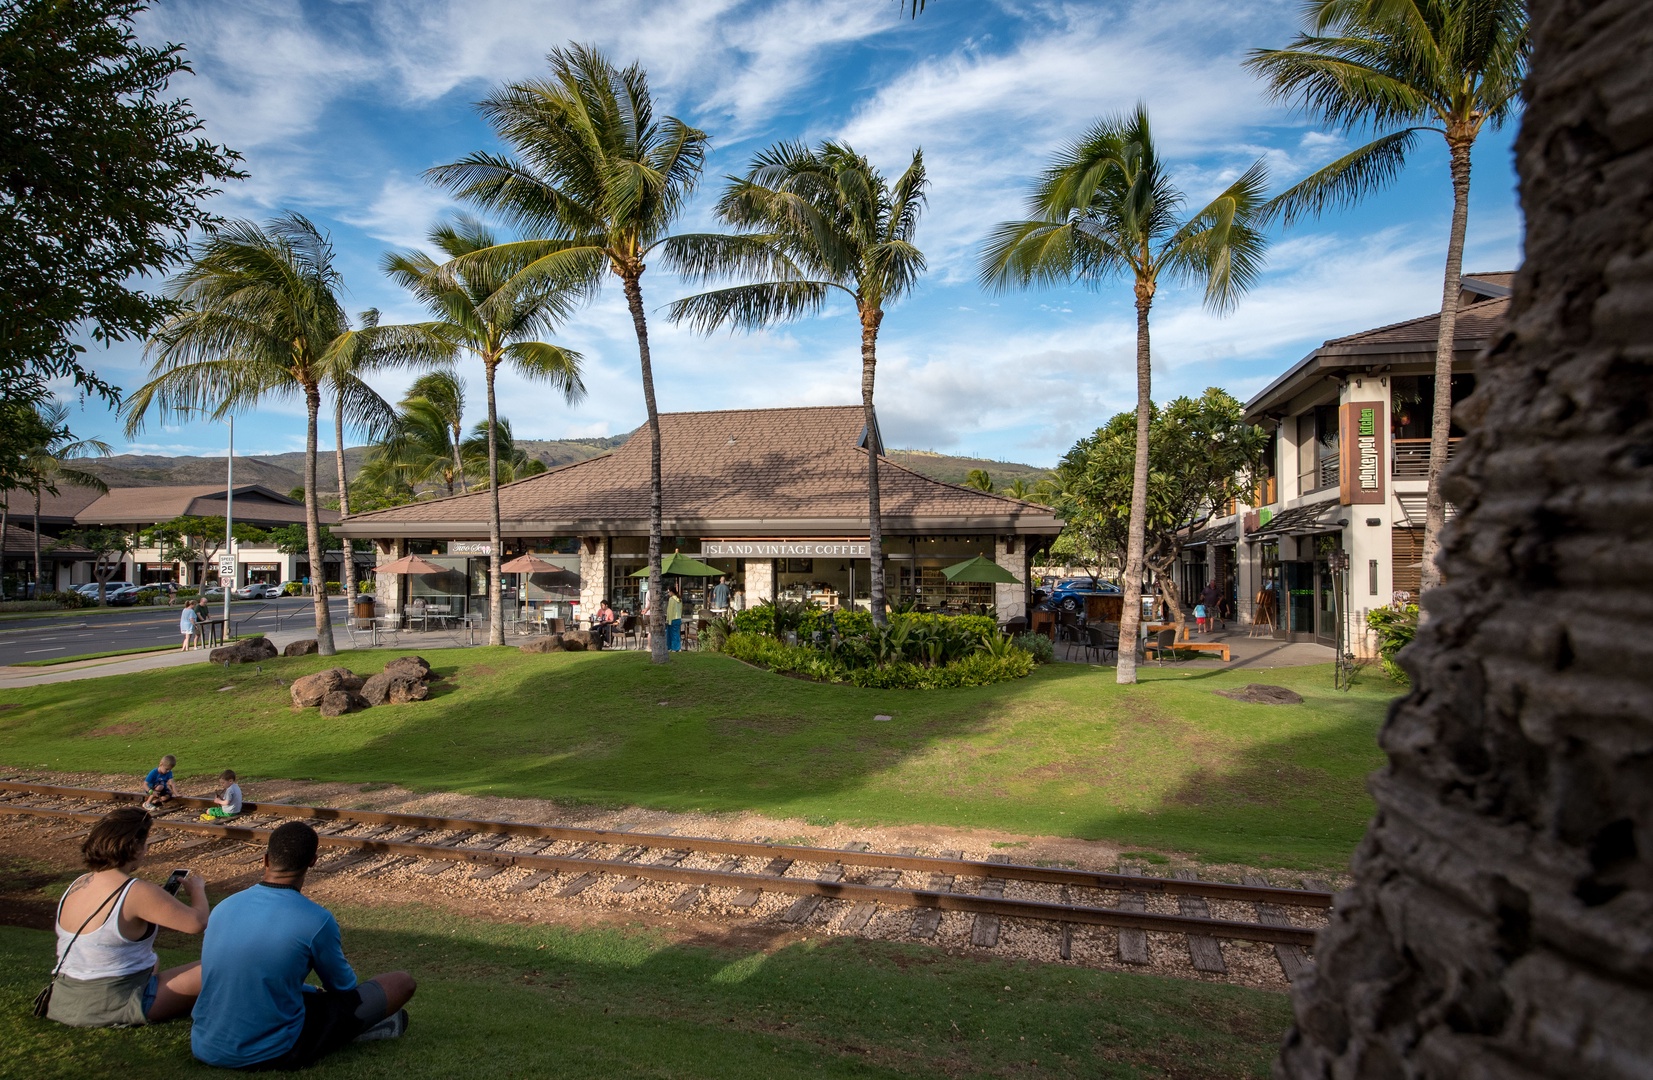 Kapolei Vacation Rentals, Coconut Plantation 1100-2 - Enjoy shopping and dining on the island.